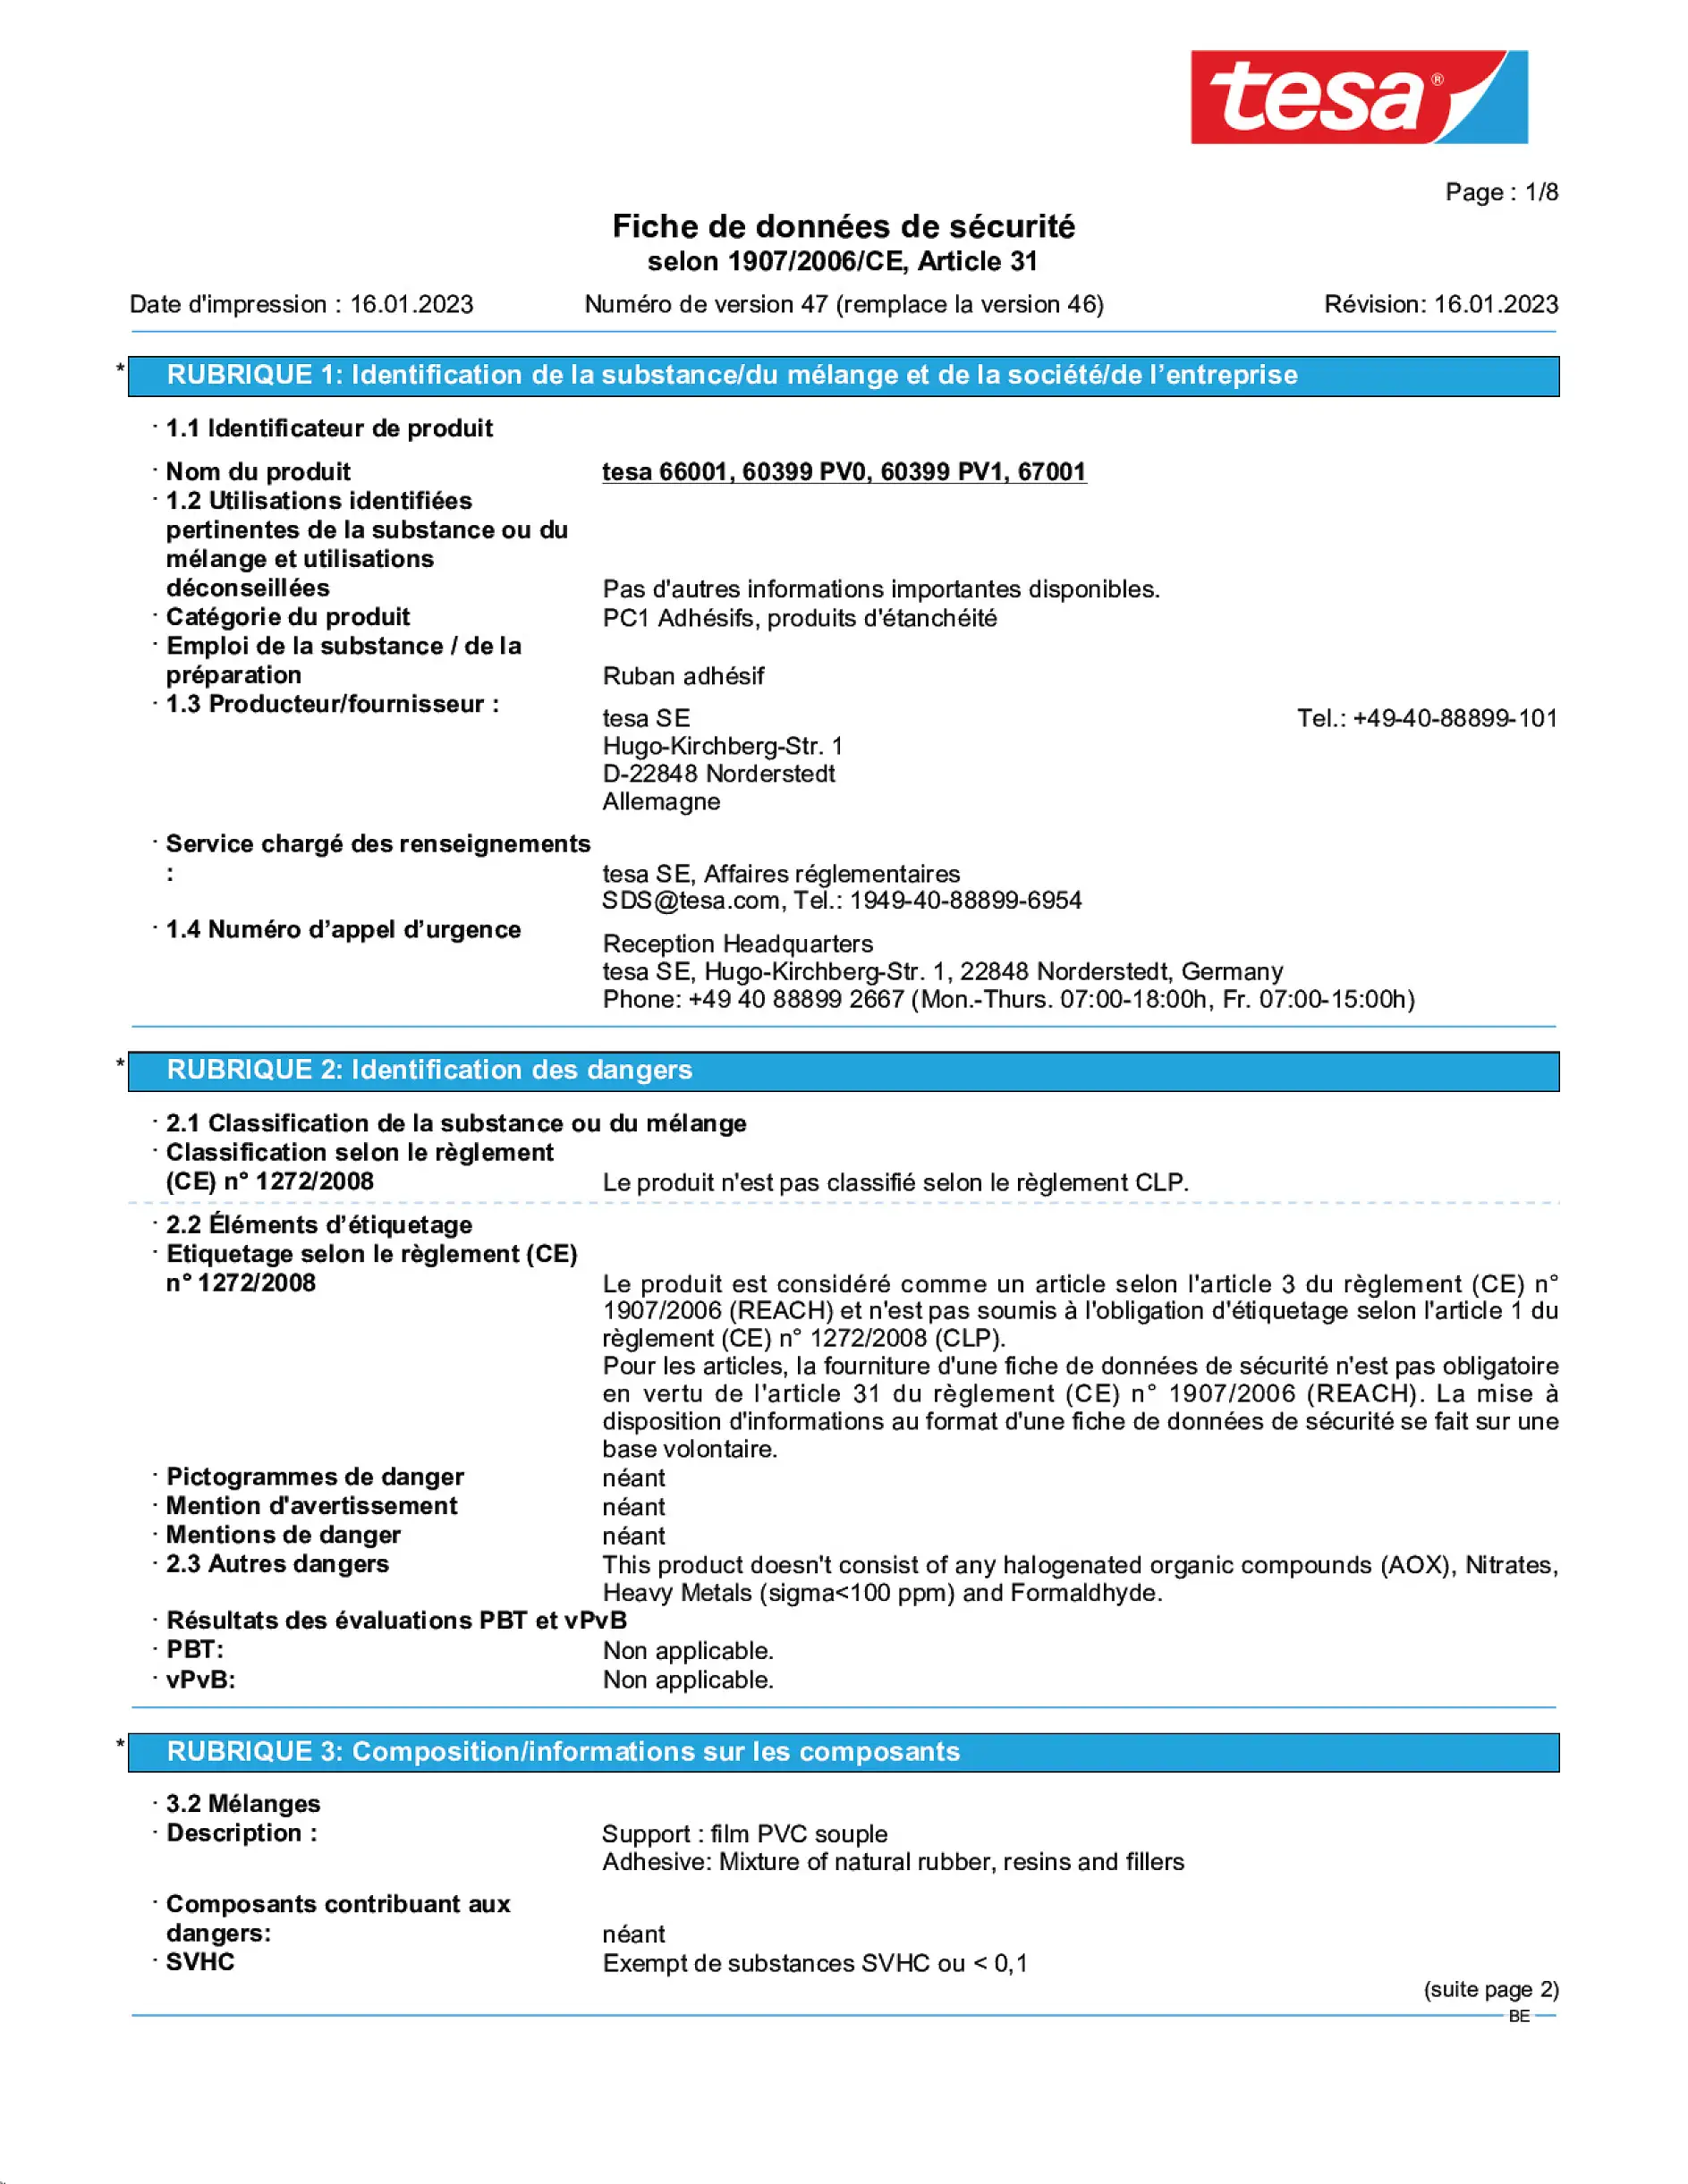 Safety data sheet_tesa® Professional 66001_nl-BE_v47